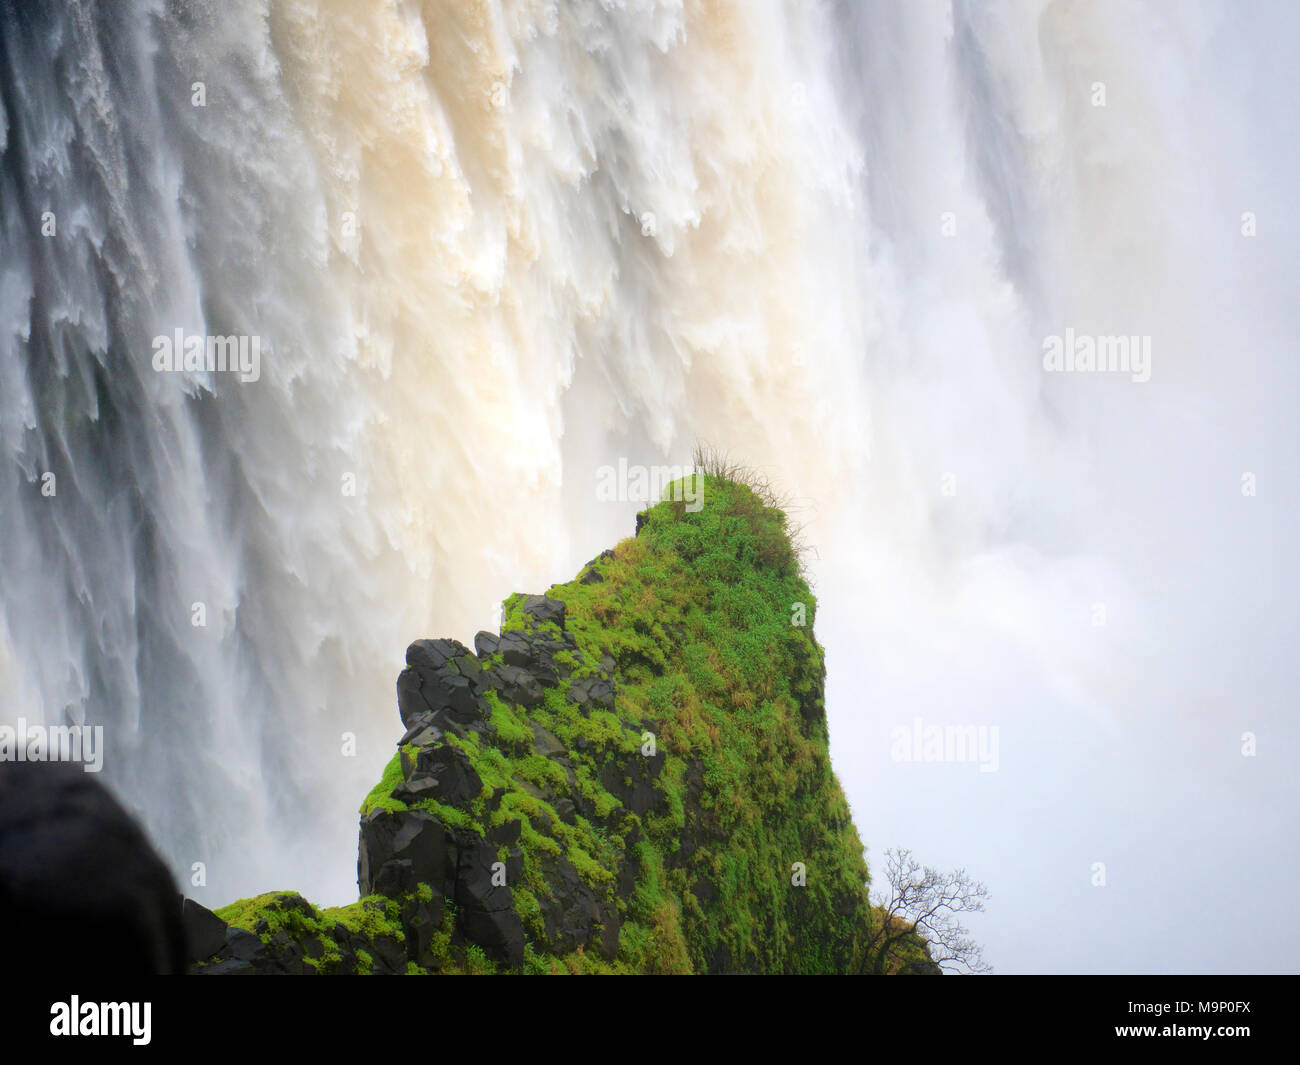 Millions of litres of Zambezi River water cascading down the Victoria Falls; Mosi-oa-Tunya, 'The Smoke that Thunders' on the Zambia Zimbabwe border Stock Photo